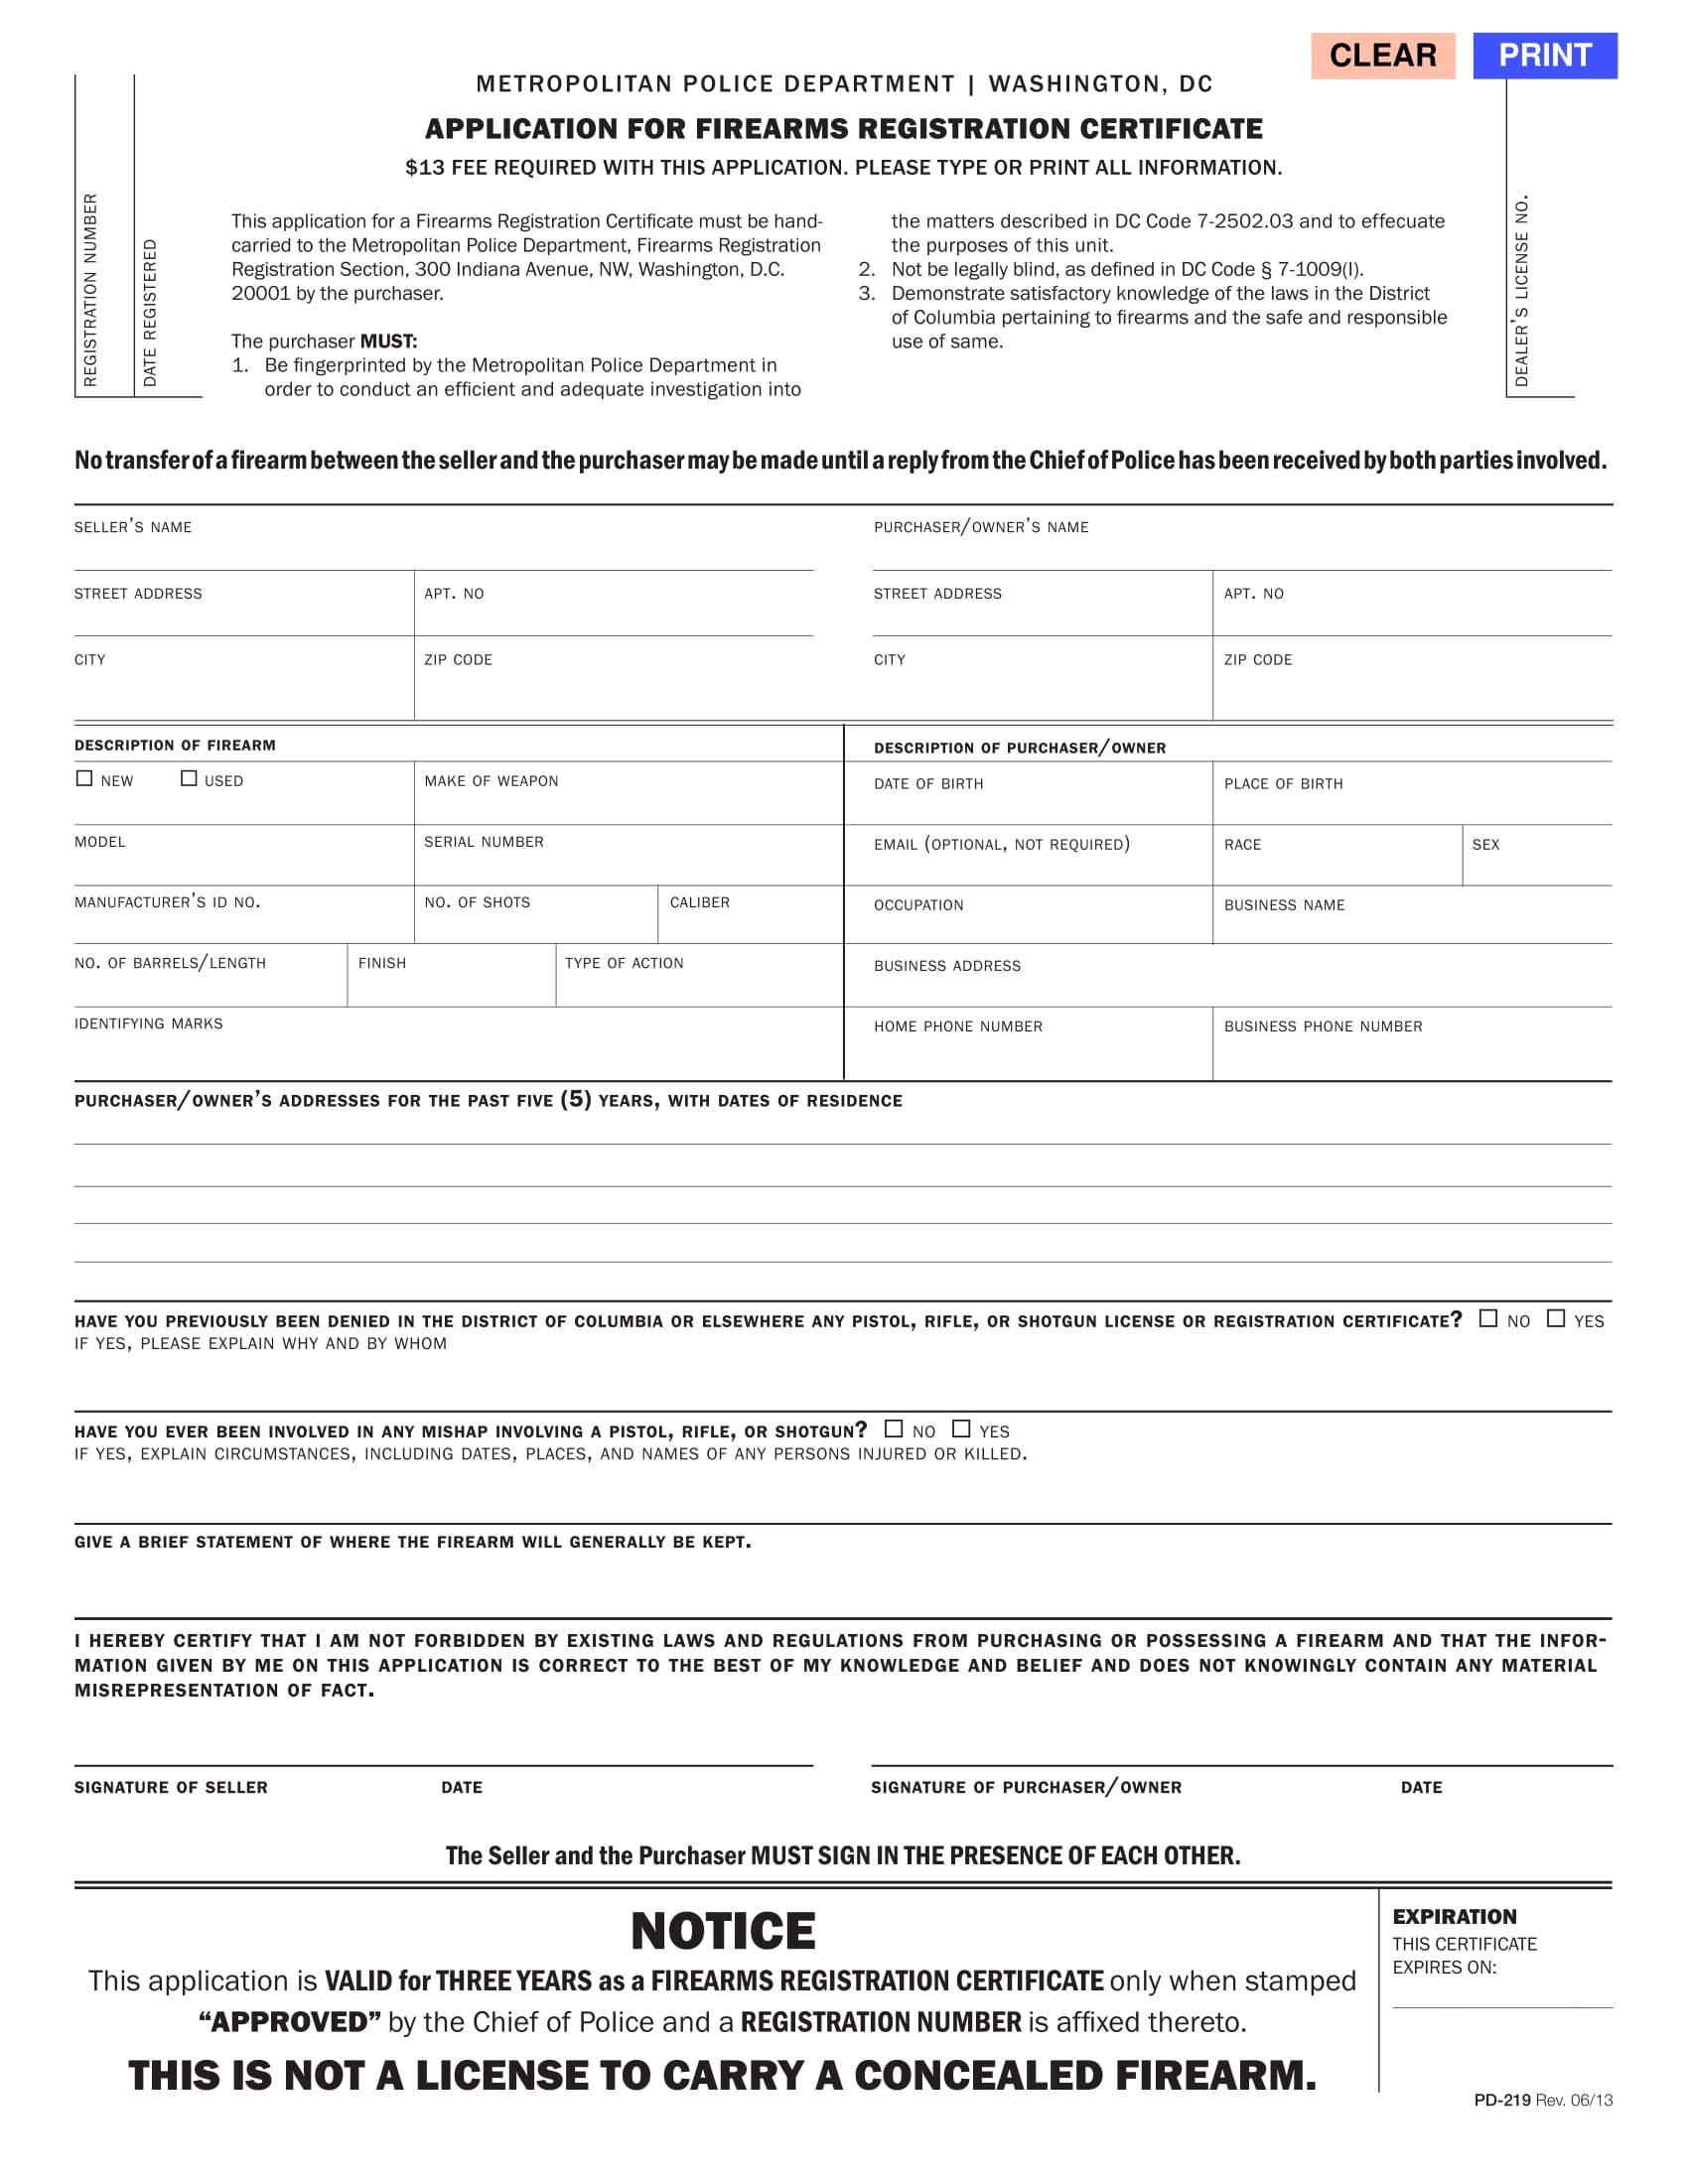 application for firearms registration certificate